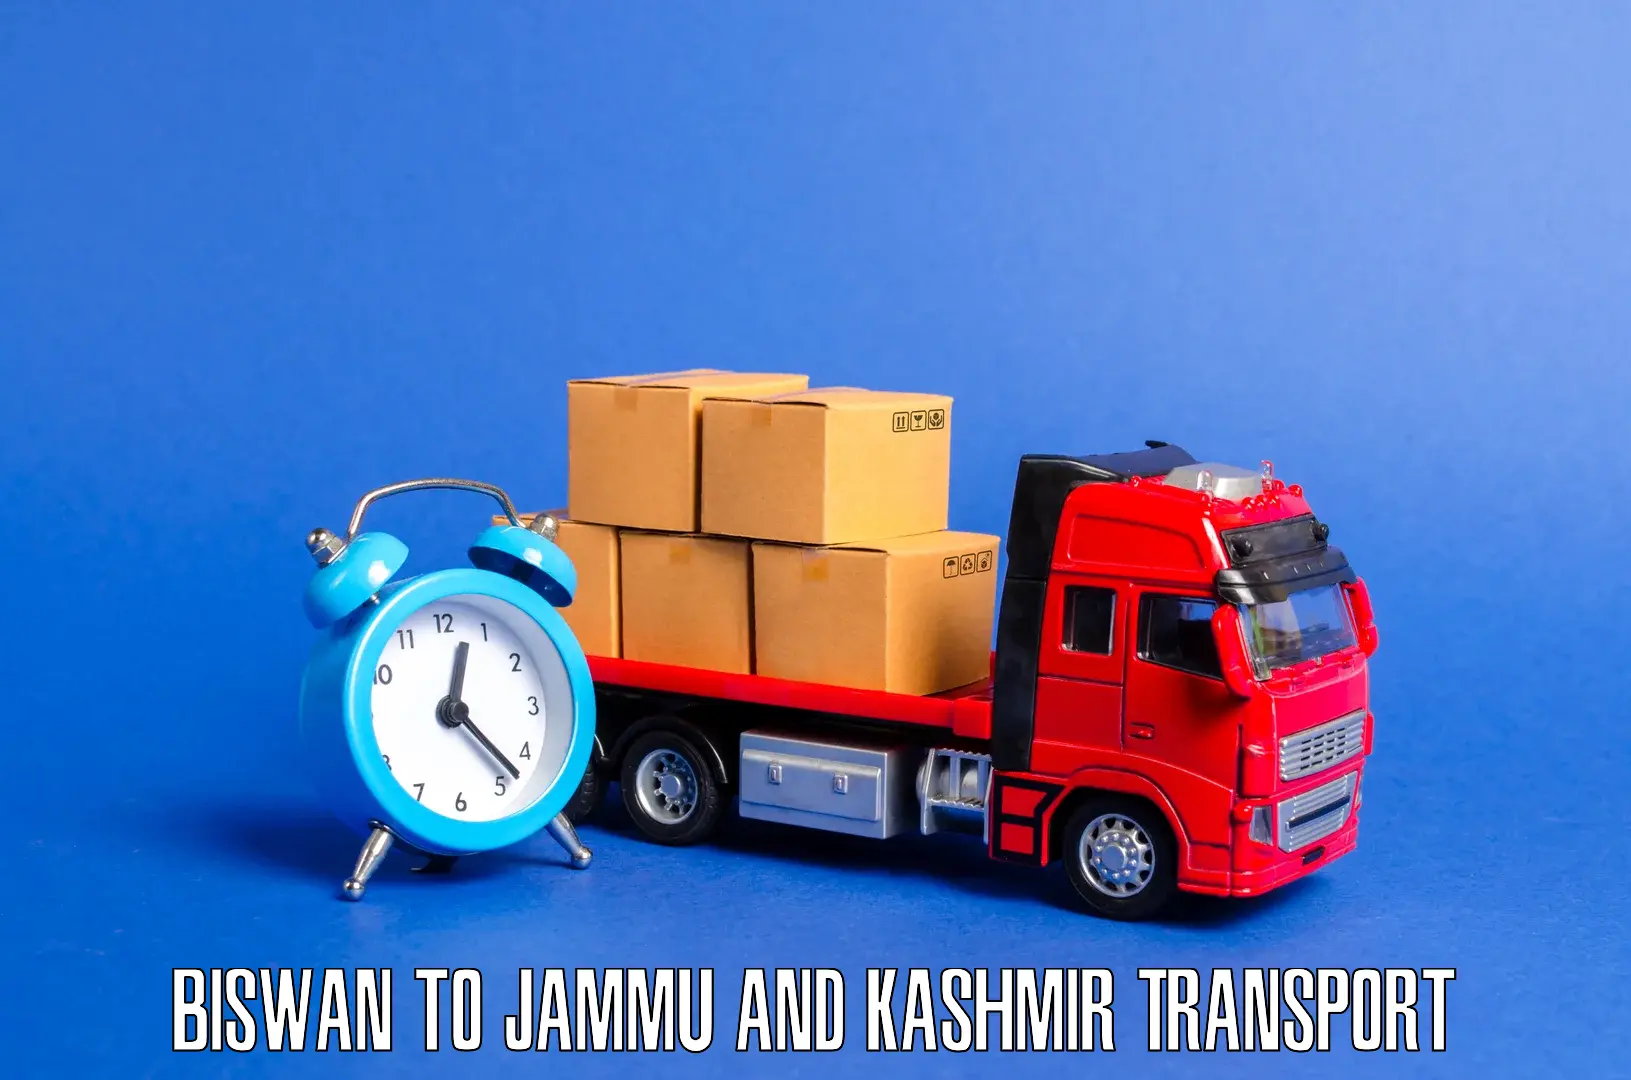 Package delivery services Biswan to Srinagar Kashmir